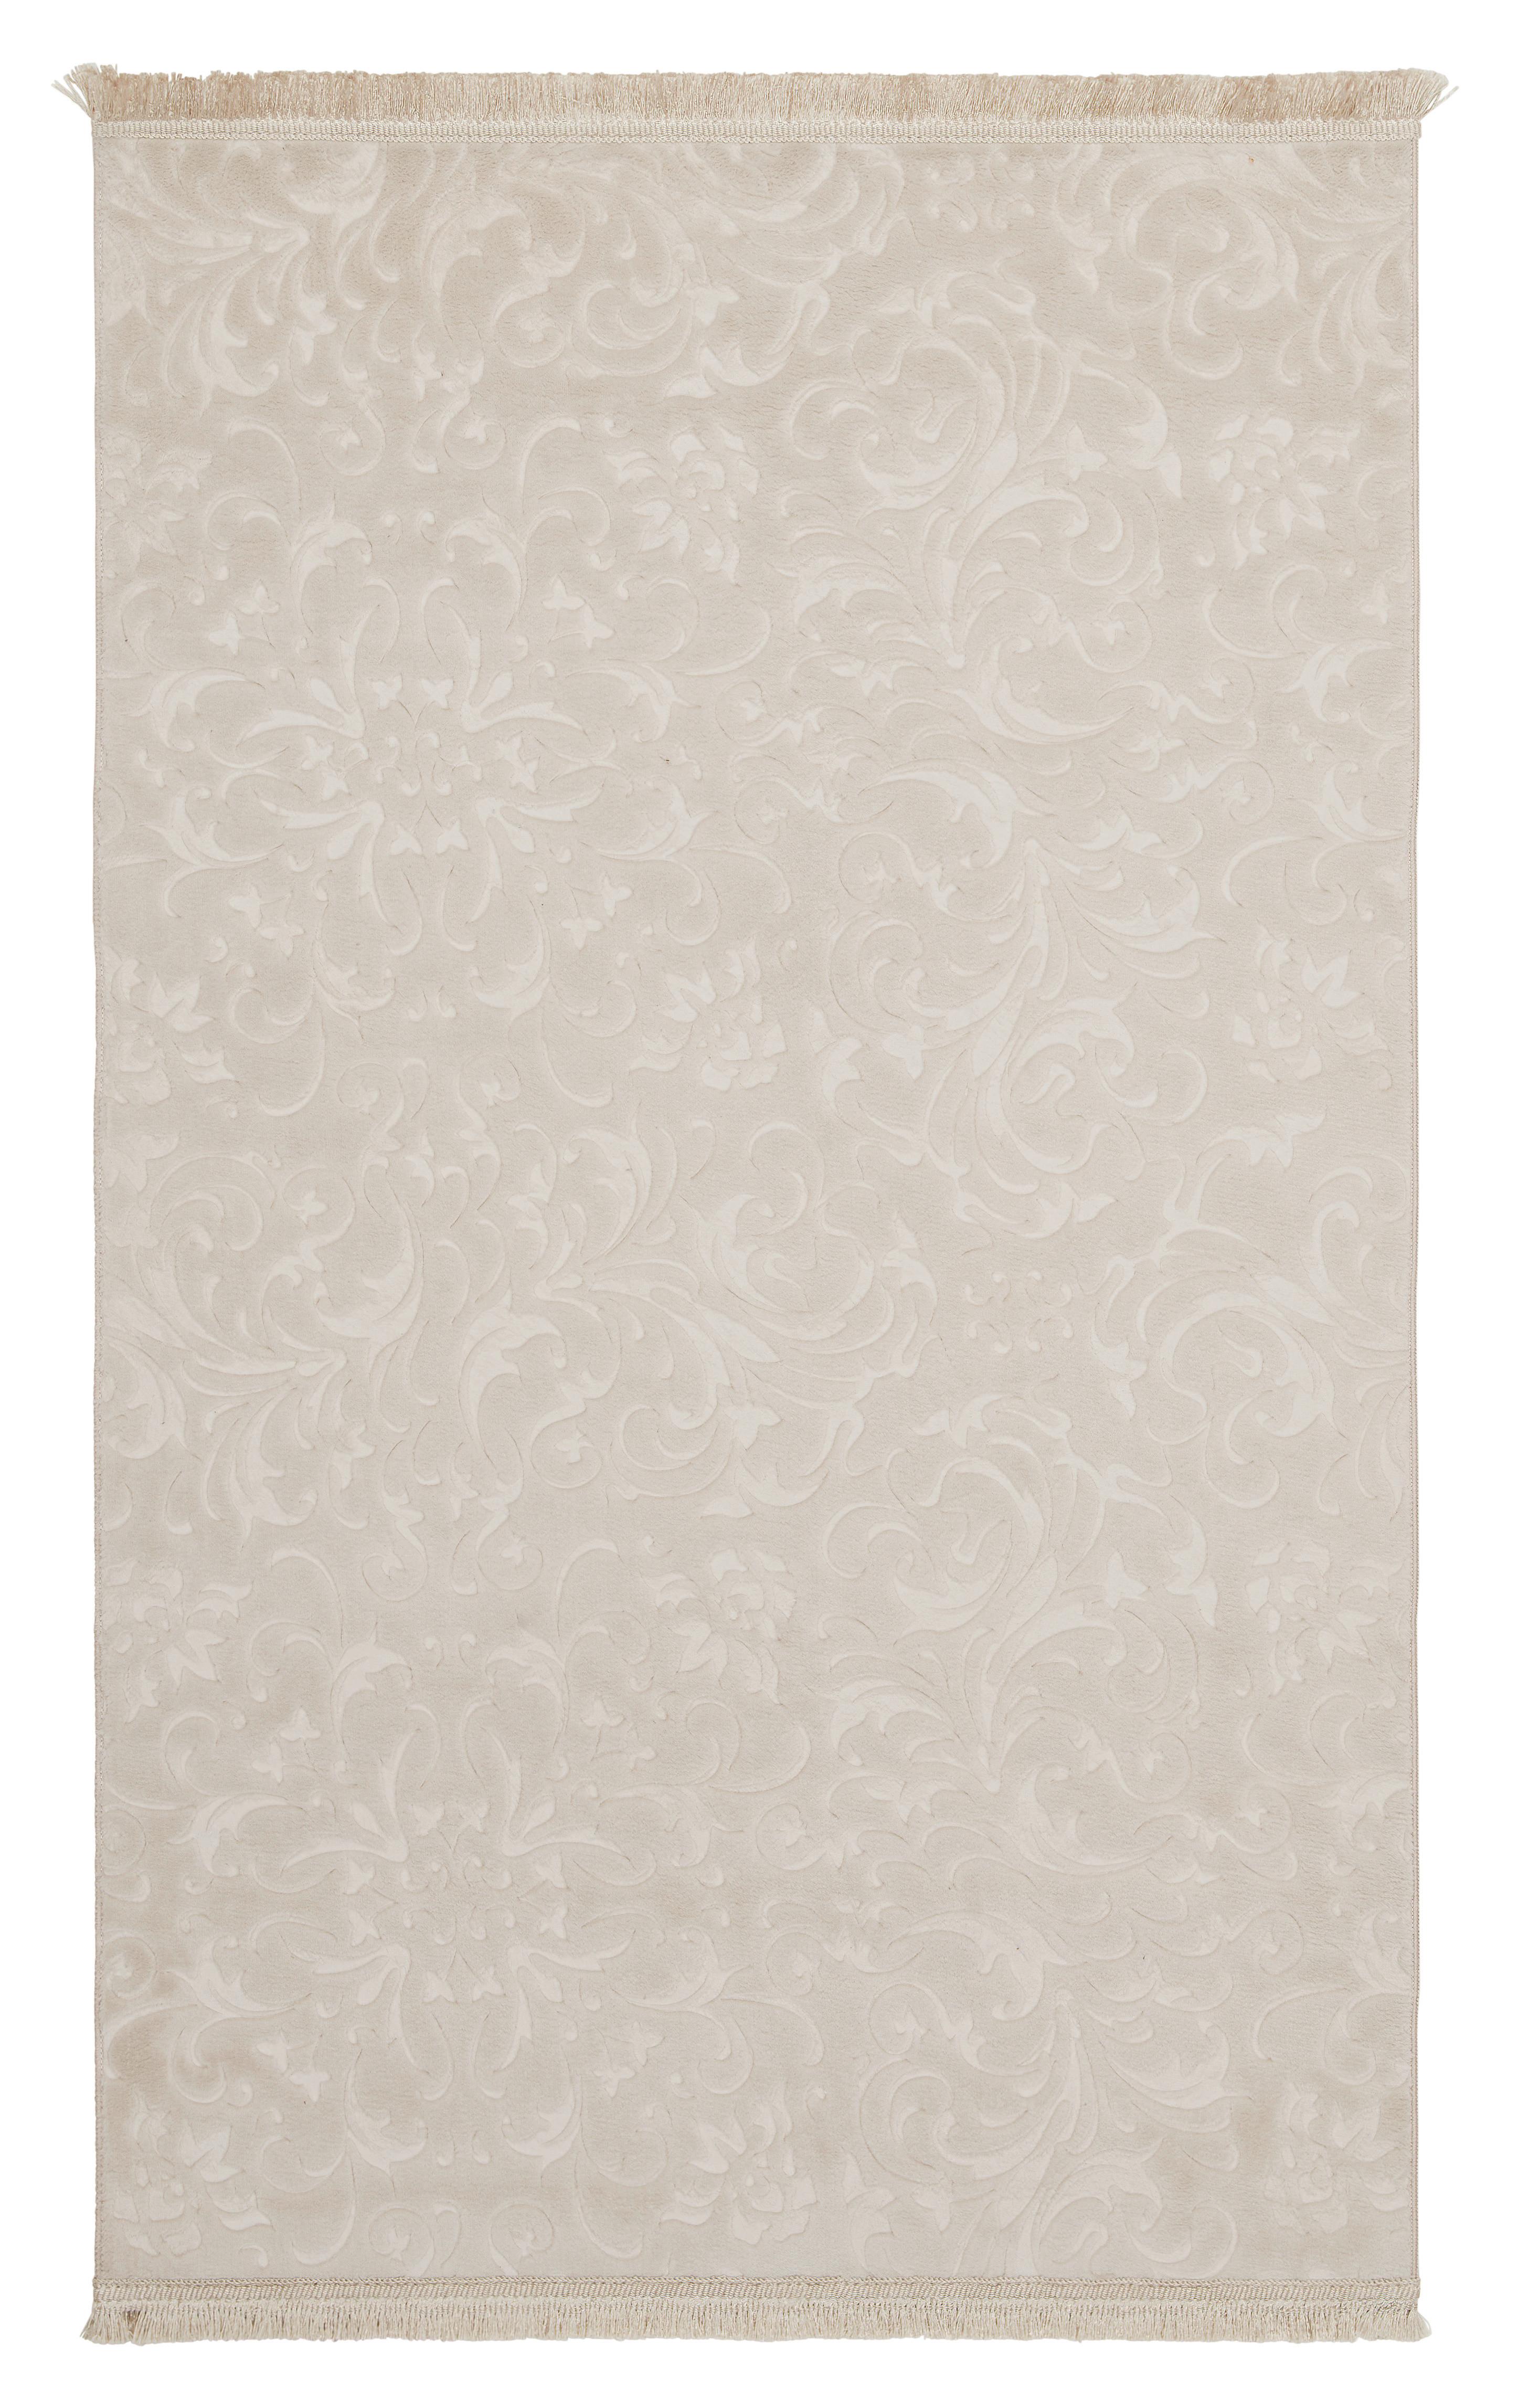 Webteppich Daphne 1 in Beige ca. 80x140cm - Beige, Modern, Textil (80l) - Modern Living